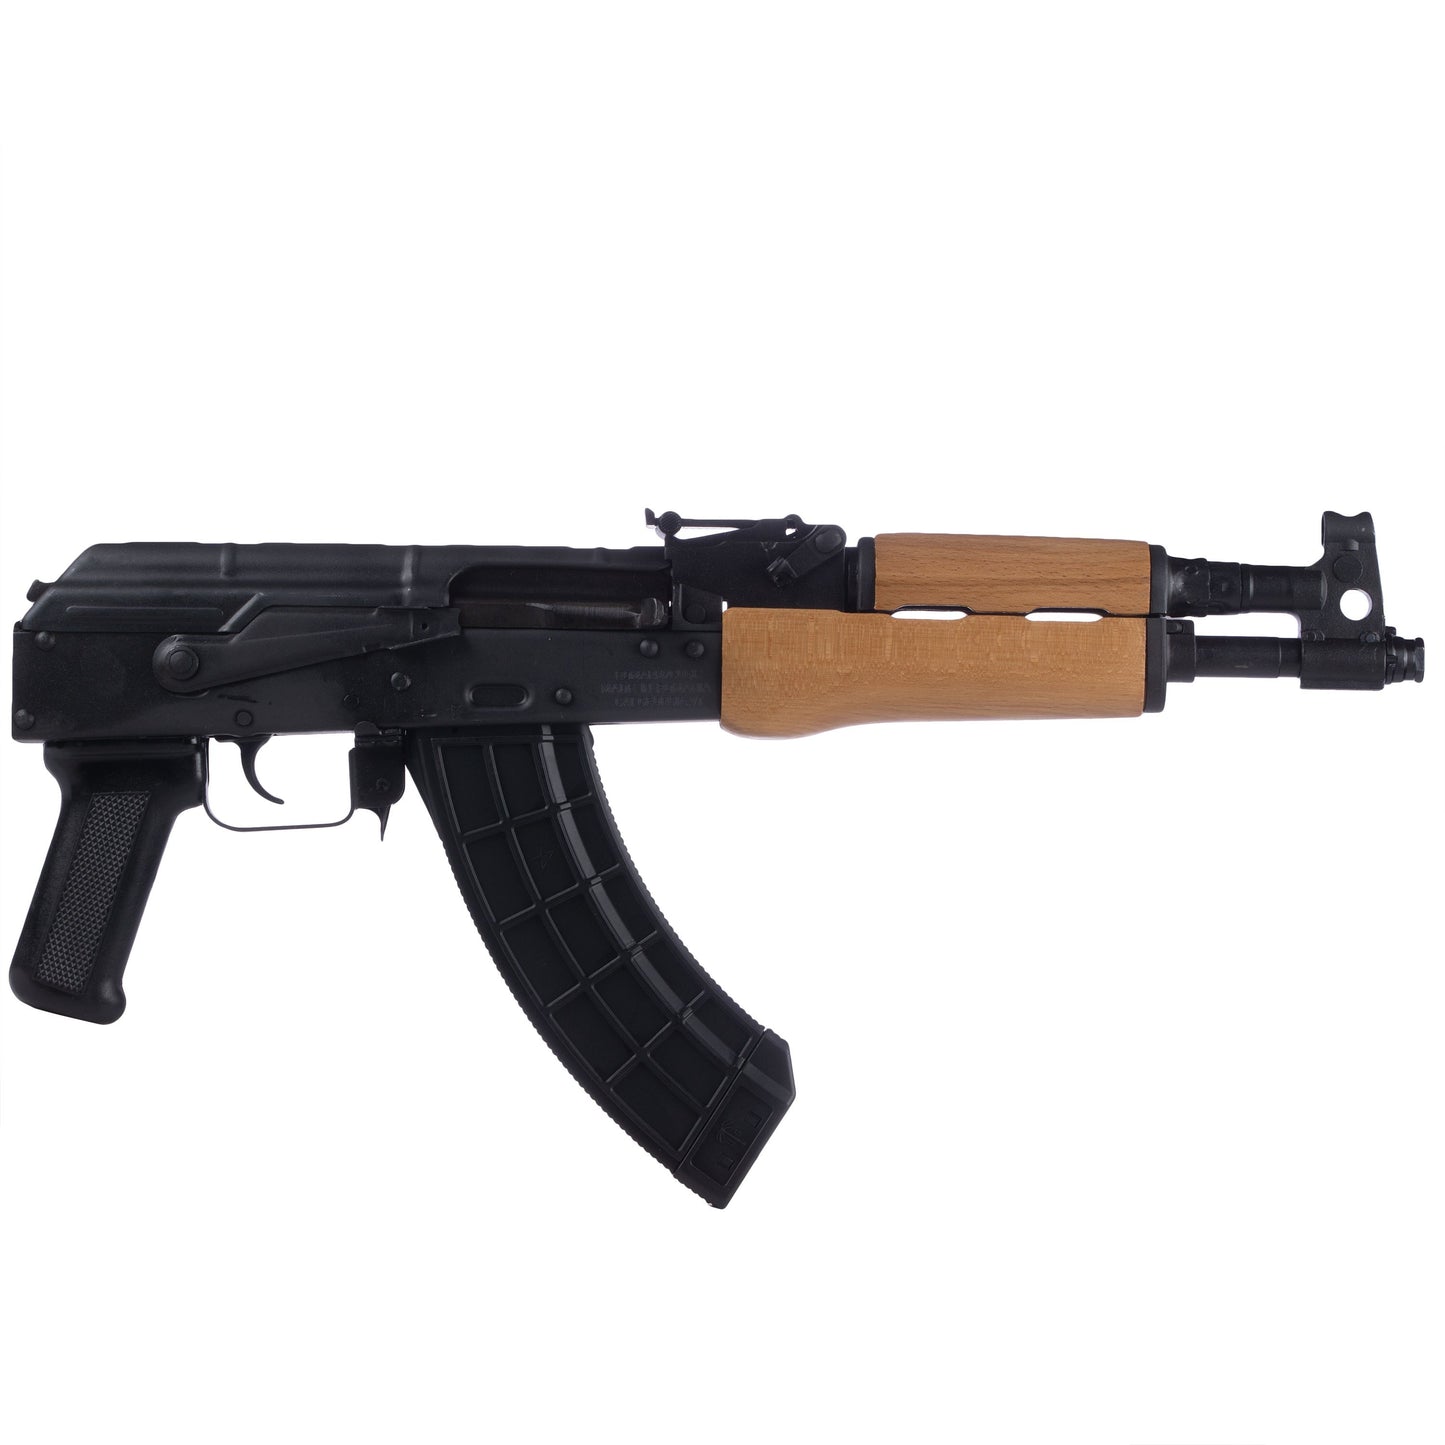 Century Arms COLLECTION / AK-Pistol Series / DRACO, MICRO DRACO & MINI DRACO / Semi-Auto Pistol / 7.62 X 39mm